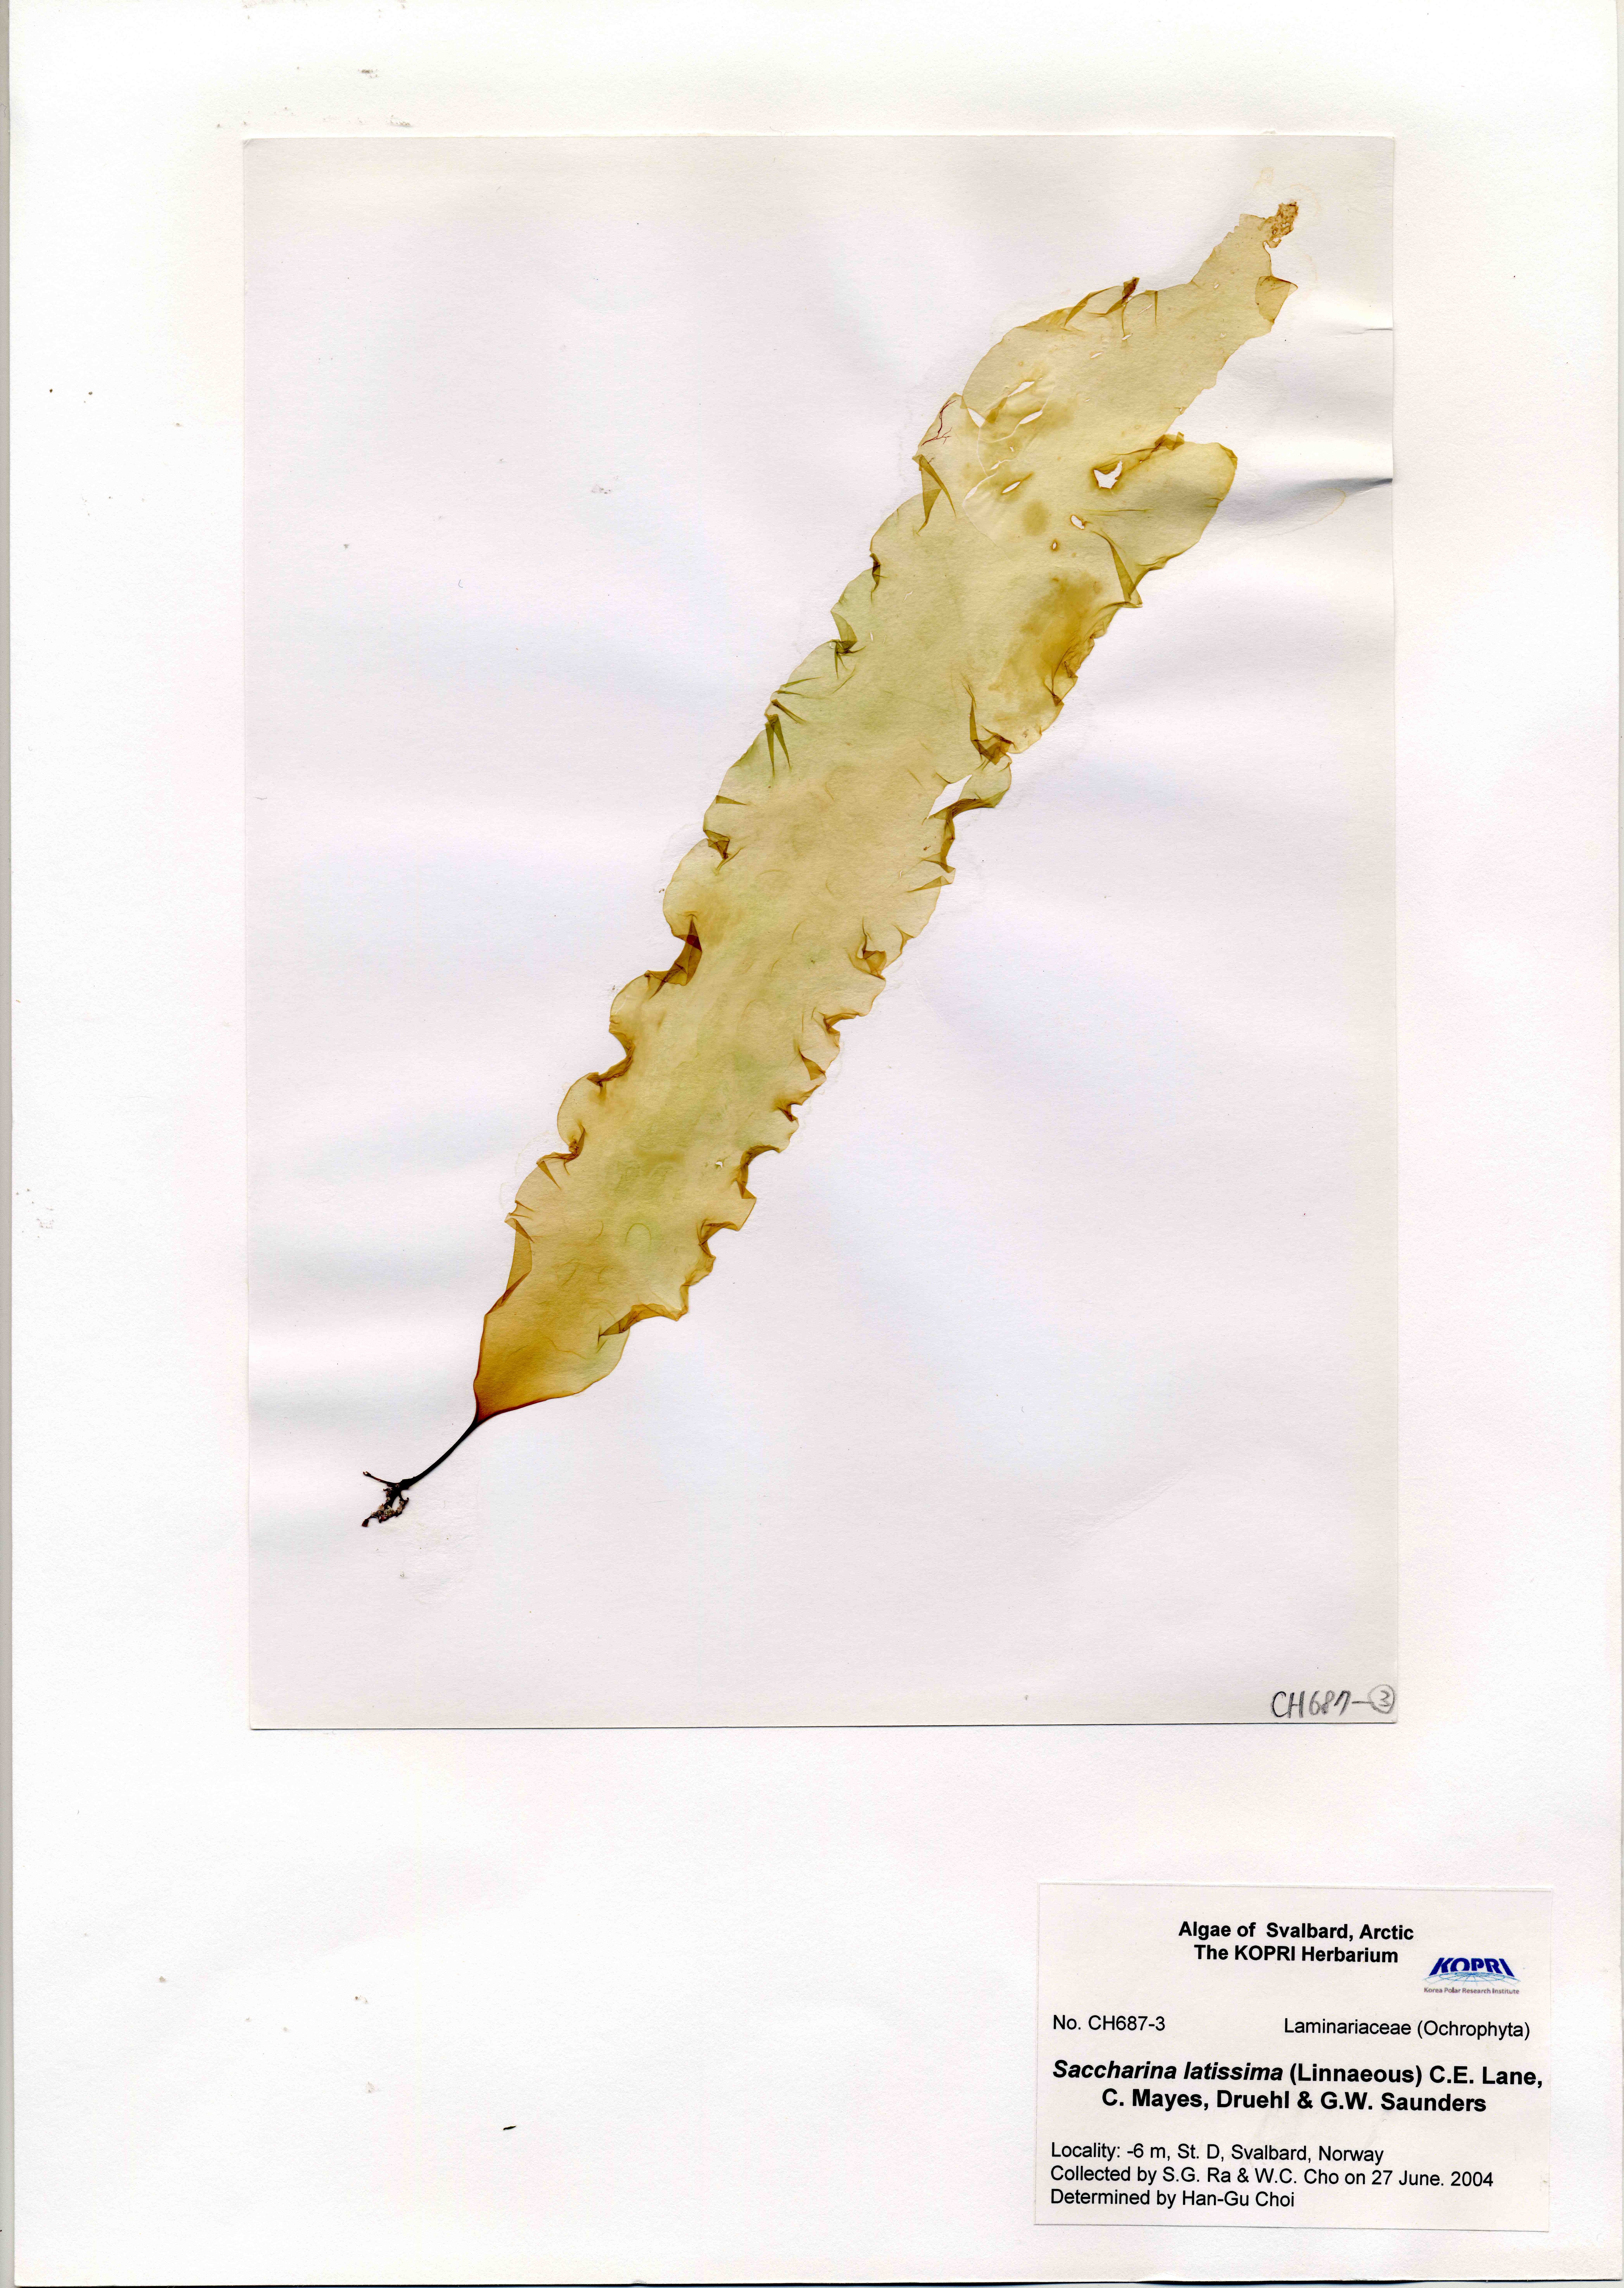 Saccharina latissima (Linnaeus) C.E.Lane, C.Mayes, Druehl & G.W.Saunders